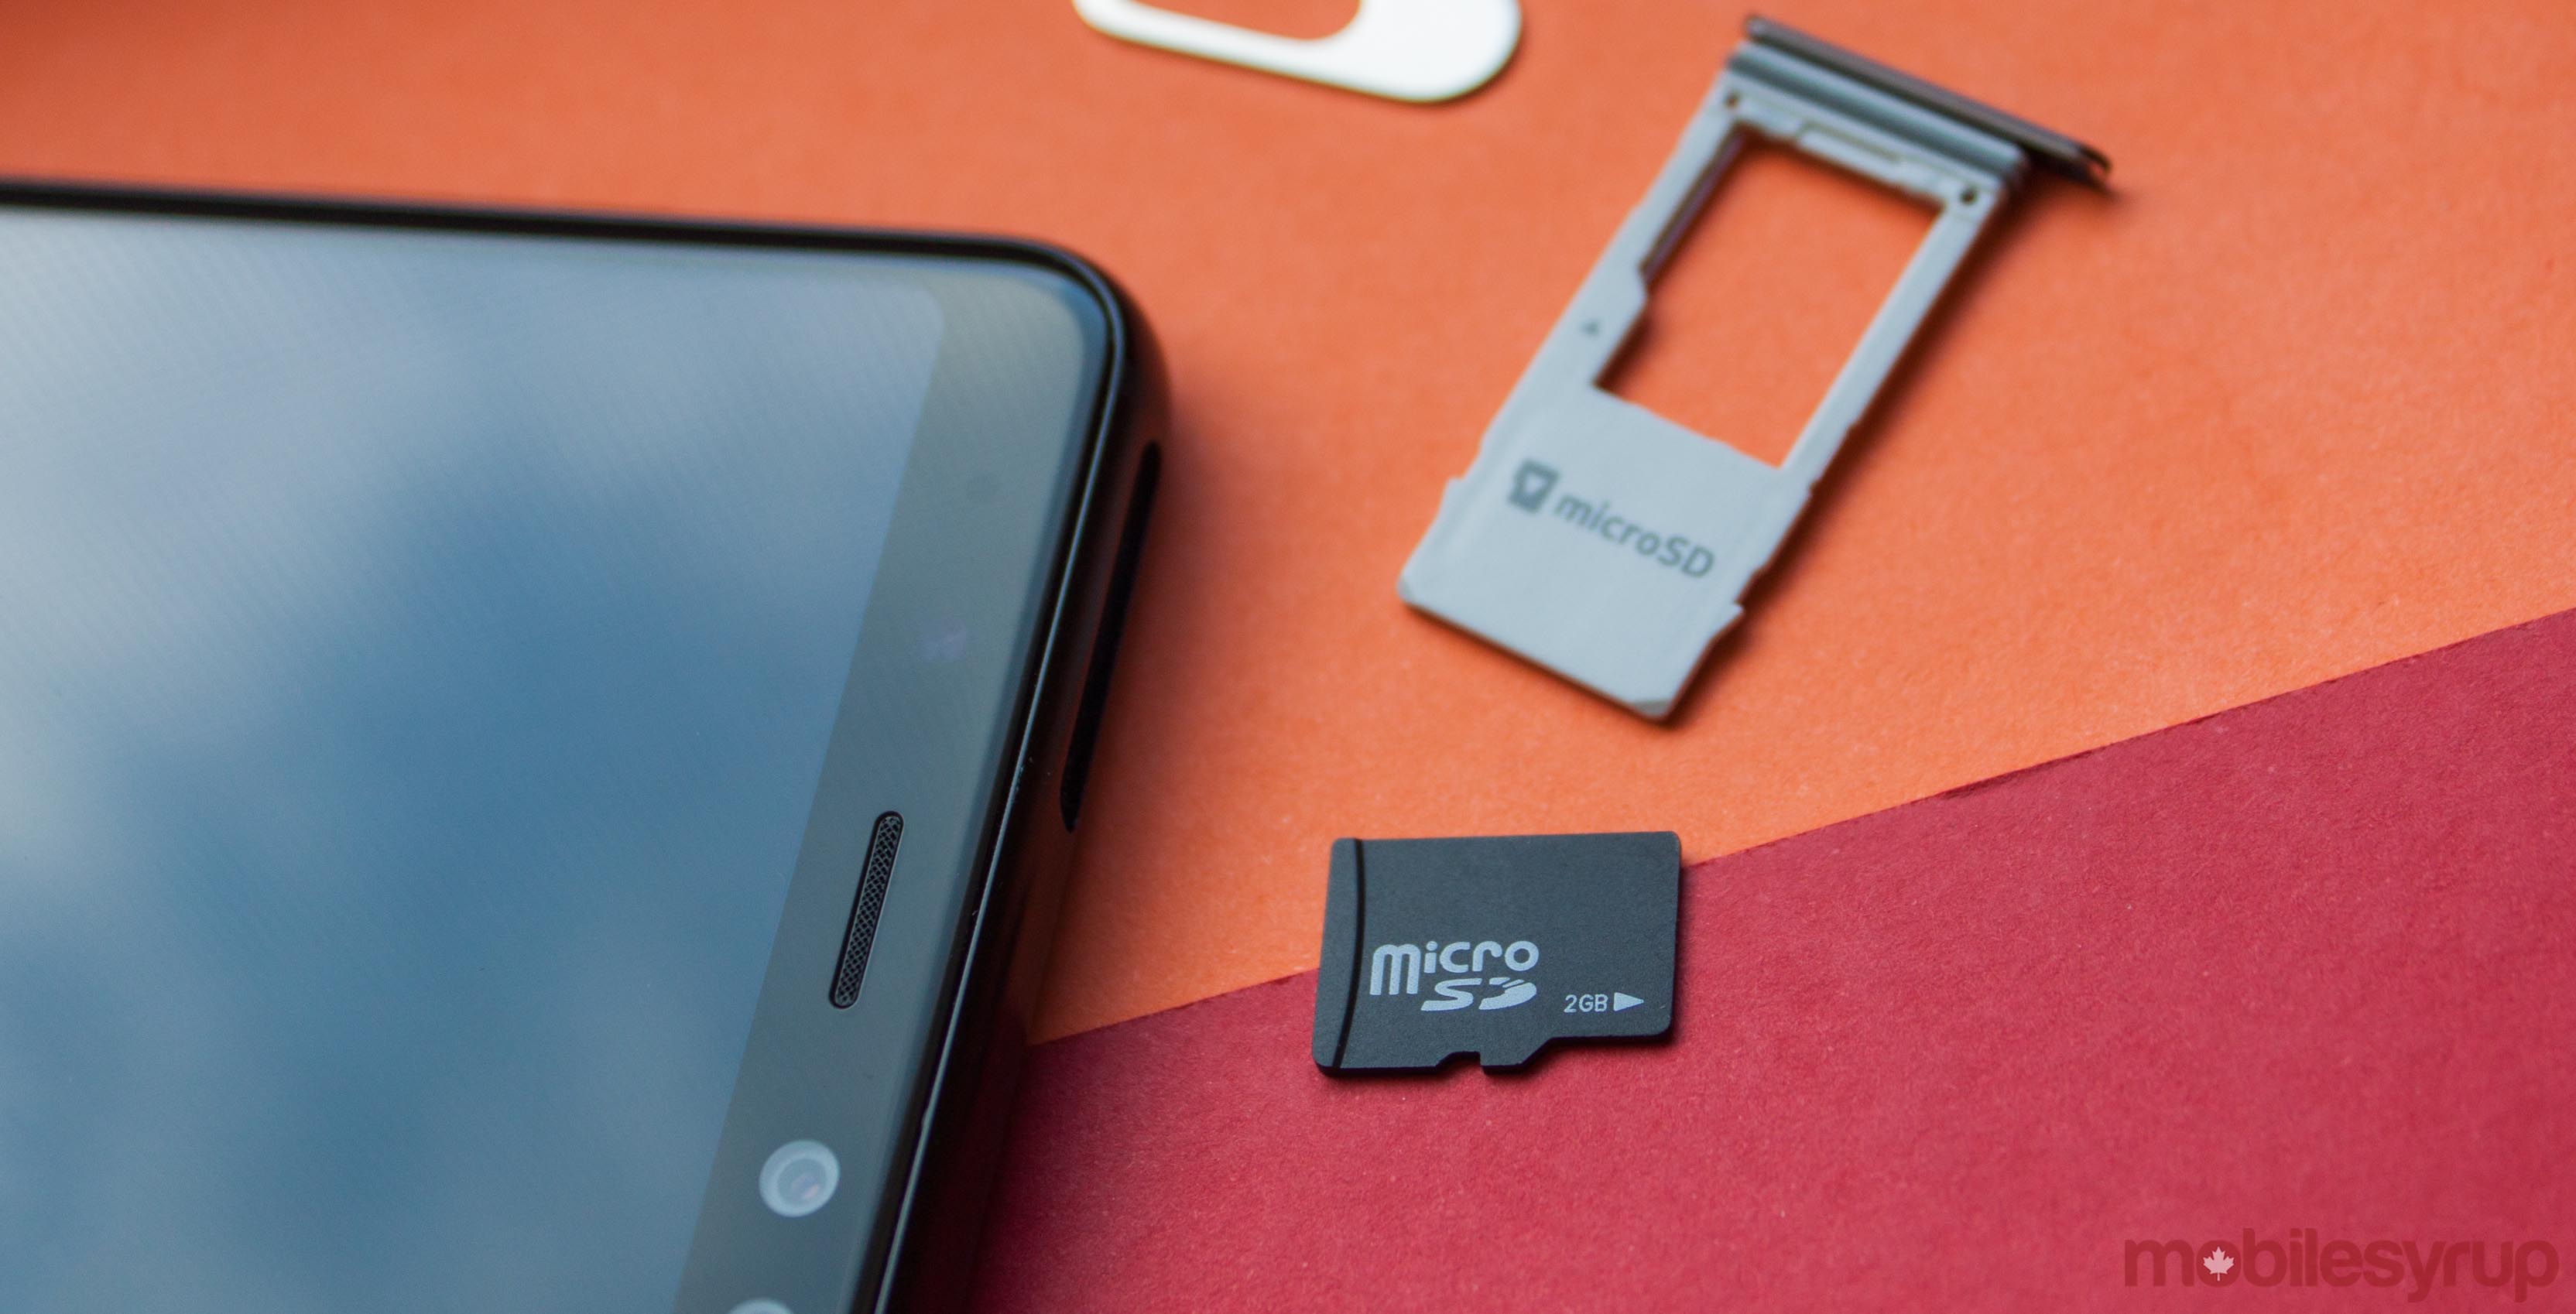 MicroSD card and phone